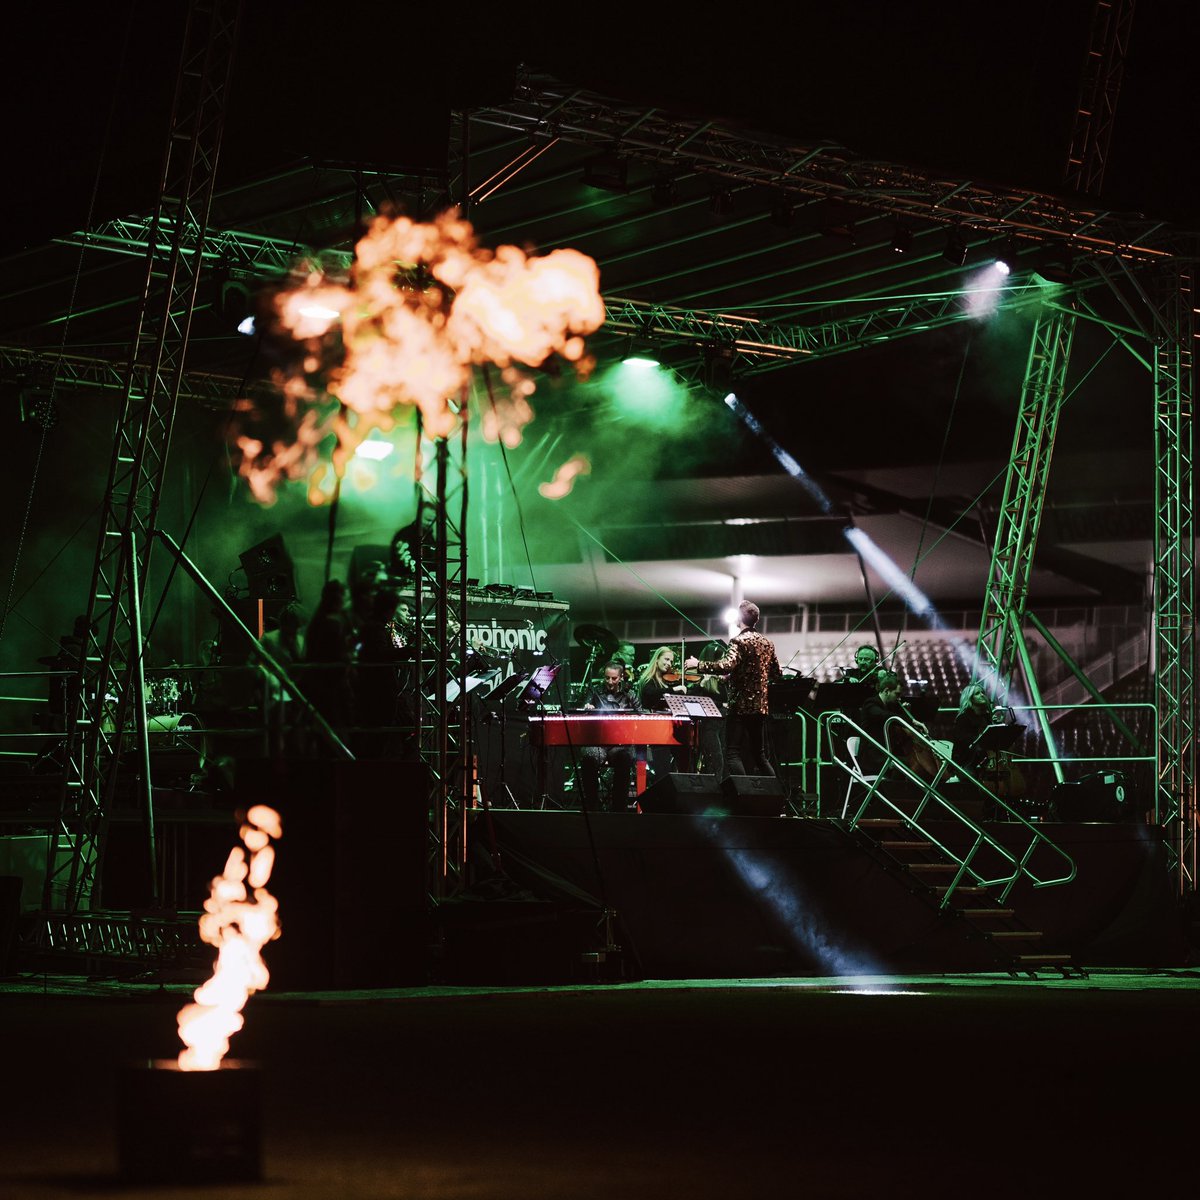 𝗧𝗵𝗮𝗻𝗸 𝘆𝗼𝘂 𝗦𝘆𝗺𝗽𝗵𝗼𝗻𝗶𝗰 𝗜𝗯𝗶𝘇𝗮 👏 How good were @symphonicibiza at Edgbaston last night!? Thank you for bringing our Ibiza Classics Fireworks Party to life 🙌 #Edgbaston | #Fireworks